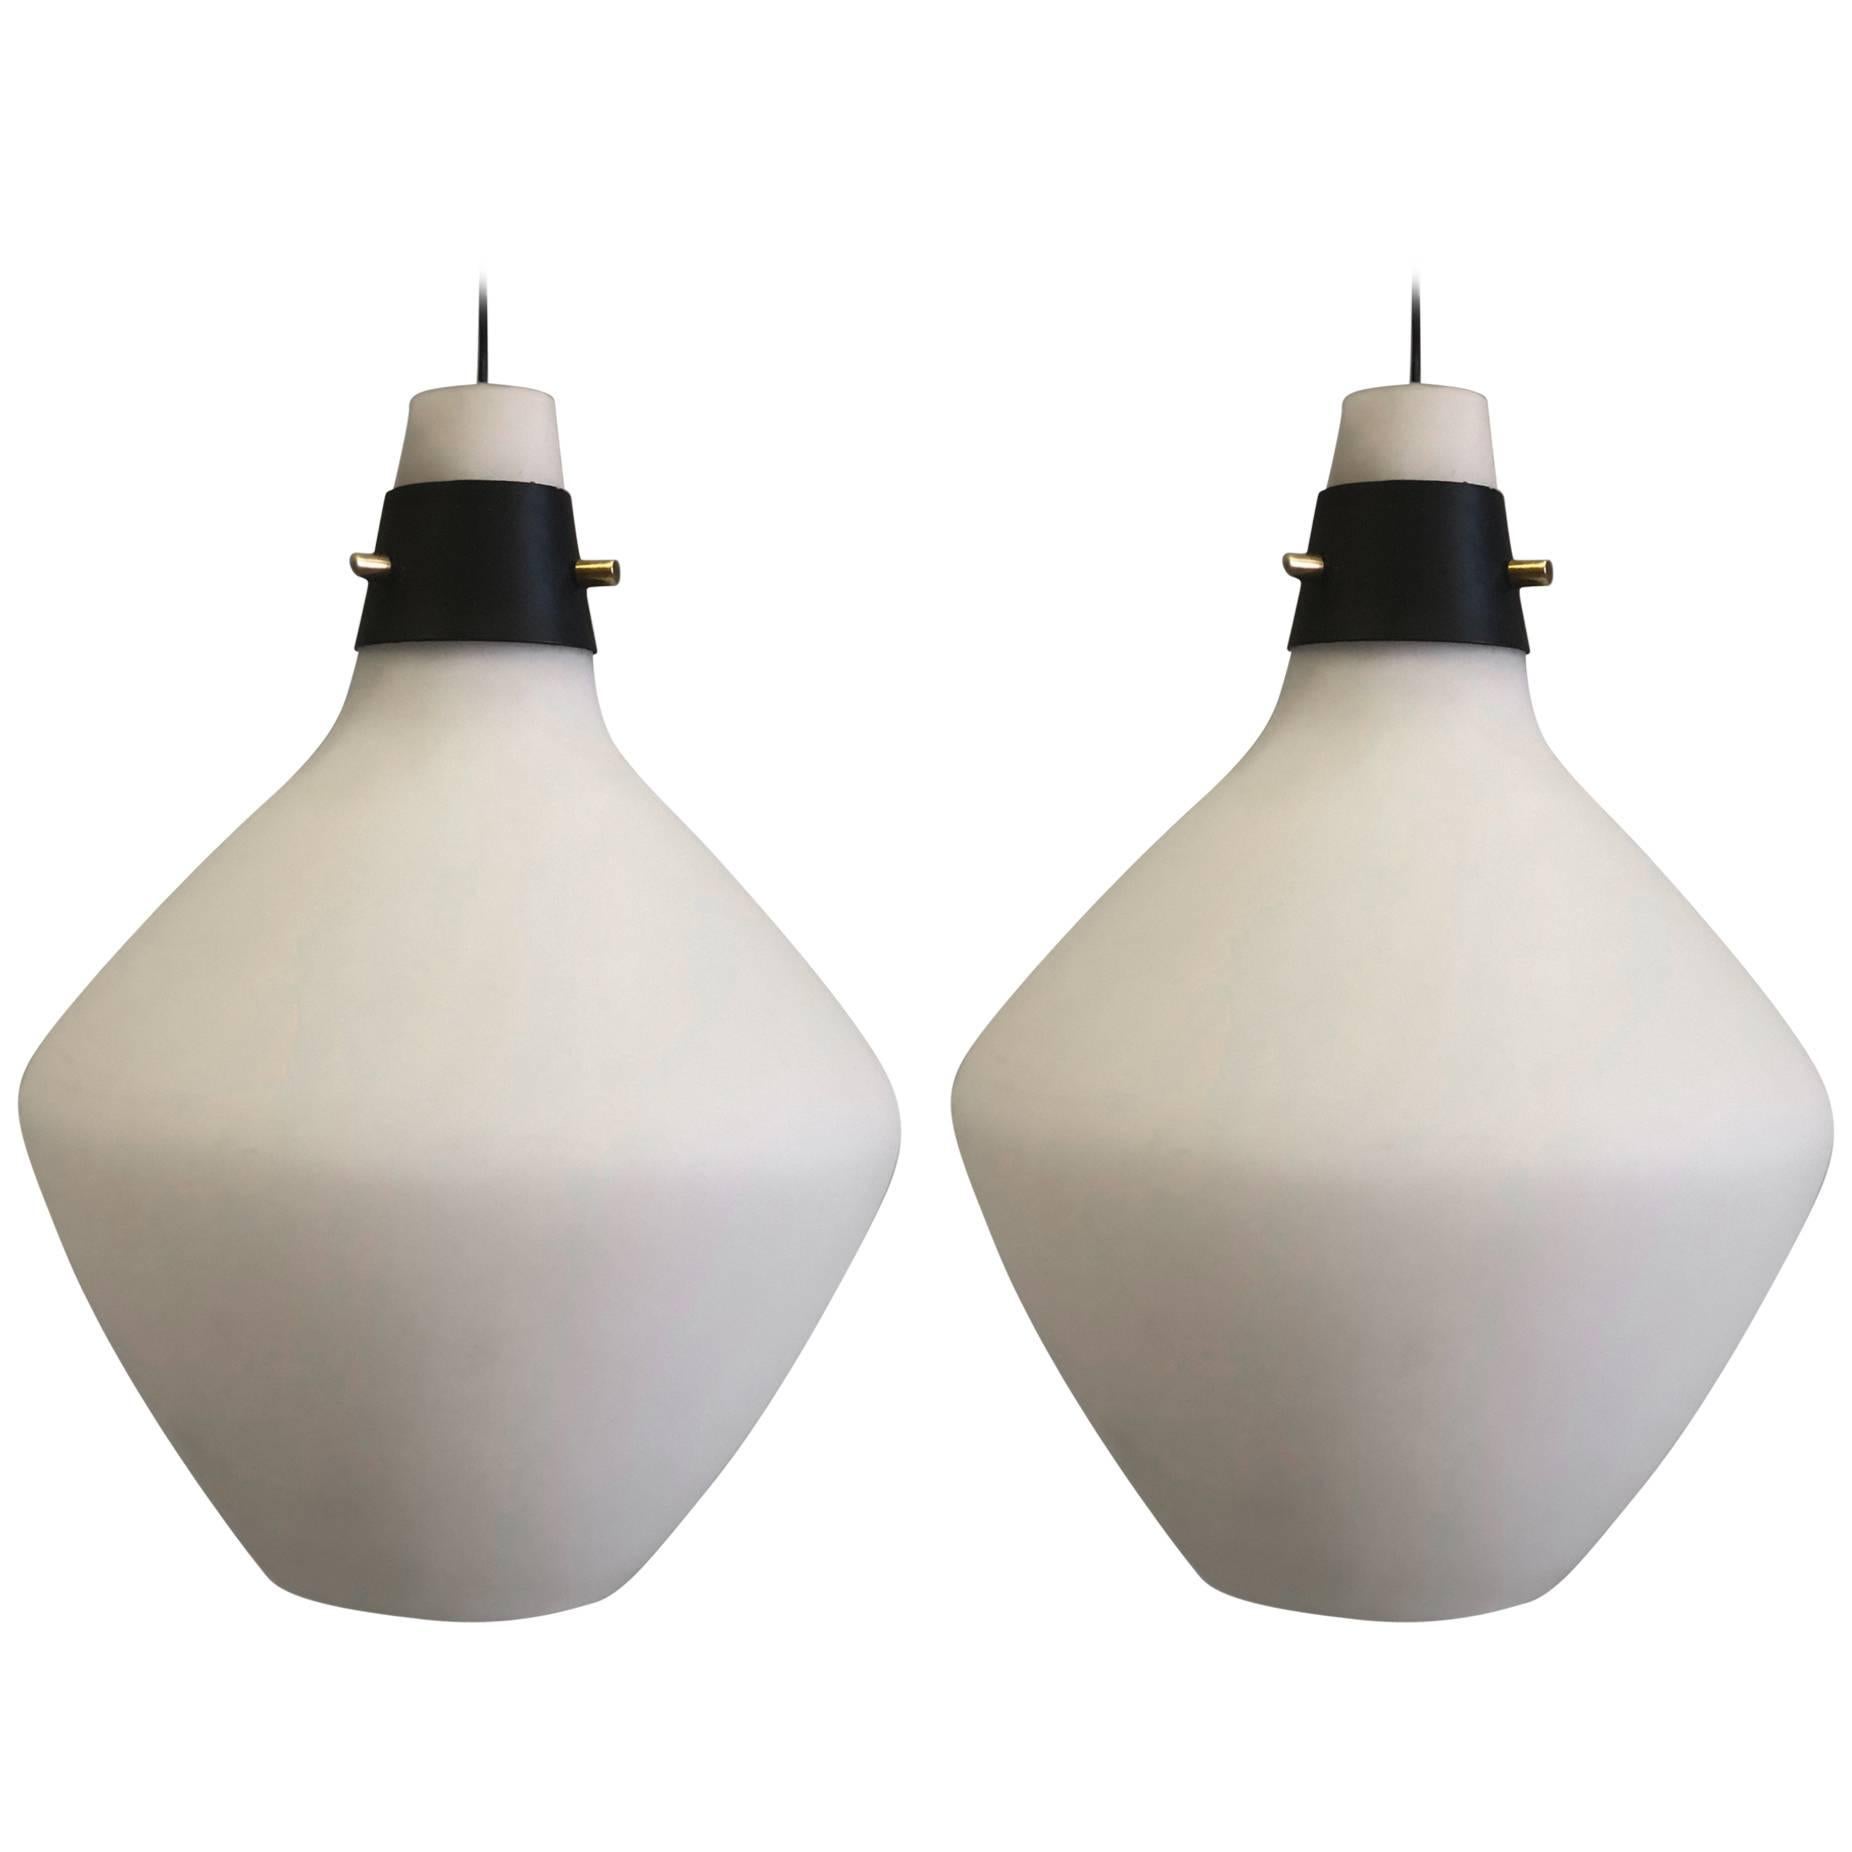 Pair of Italian Mid-Century Modern Glass Pendants / Lanterns attr. to Stilnovo For Sale